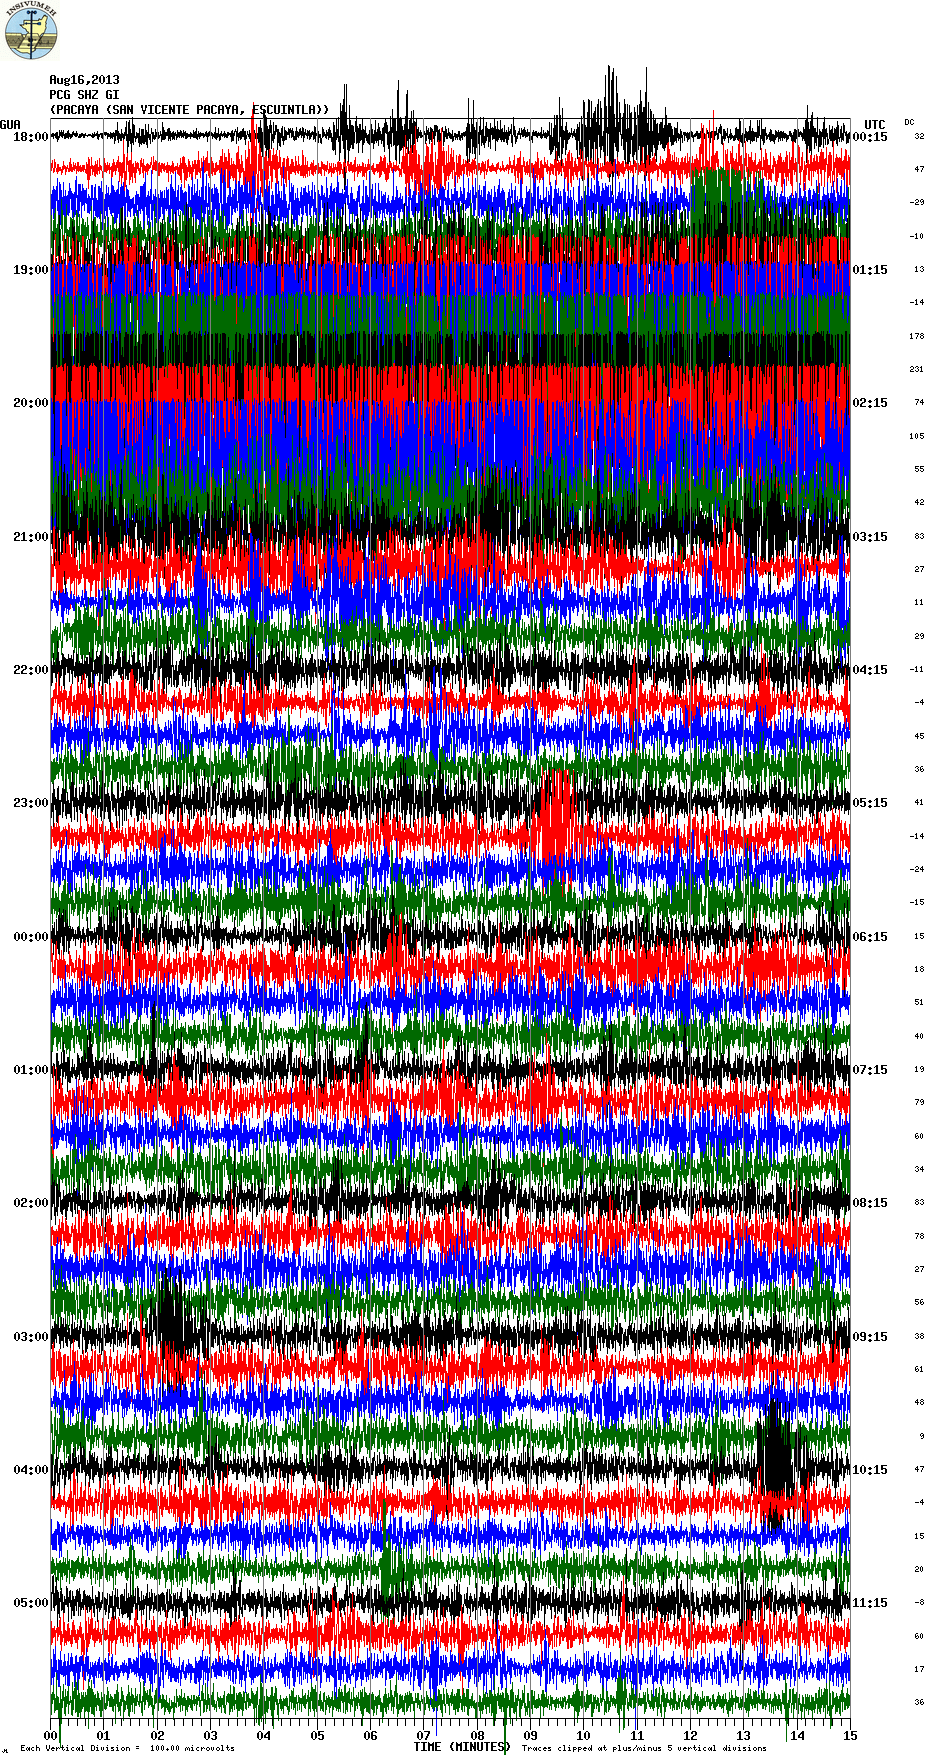 Last night's seismic signal from Pacaya (PCG station, INSIVUMEH)